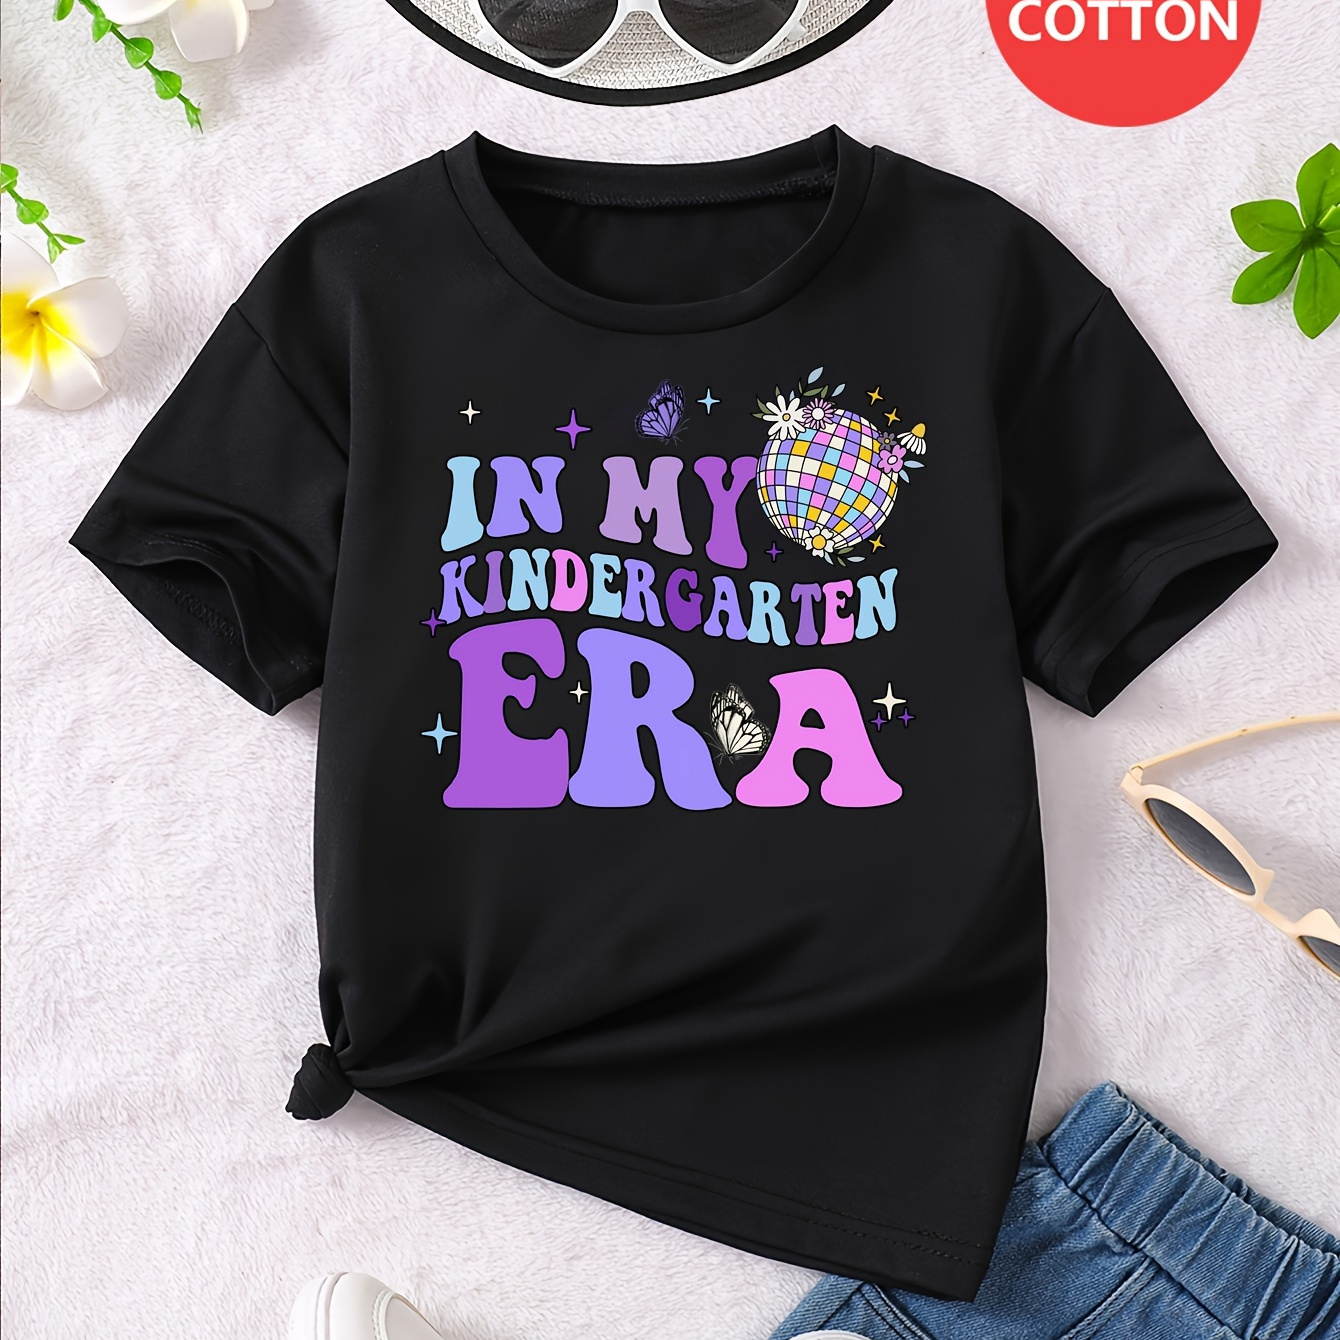 

'in My Kindergarten Era' Graphic Print Creative T-shirts, Soft & Elastic Comfy Crew Neck Short Sleeve Tee, Girls' Summer Tops